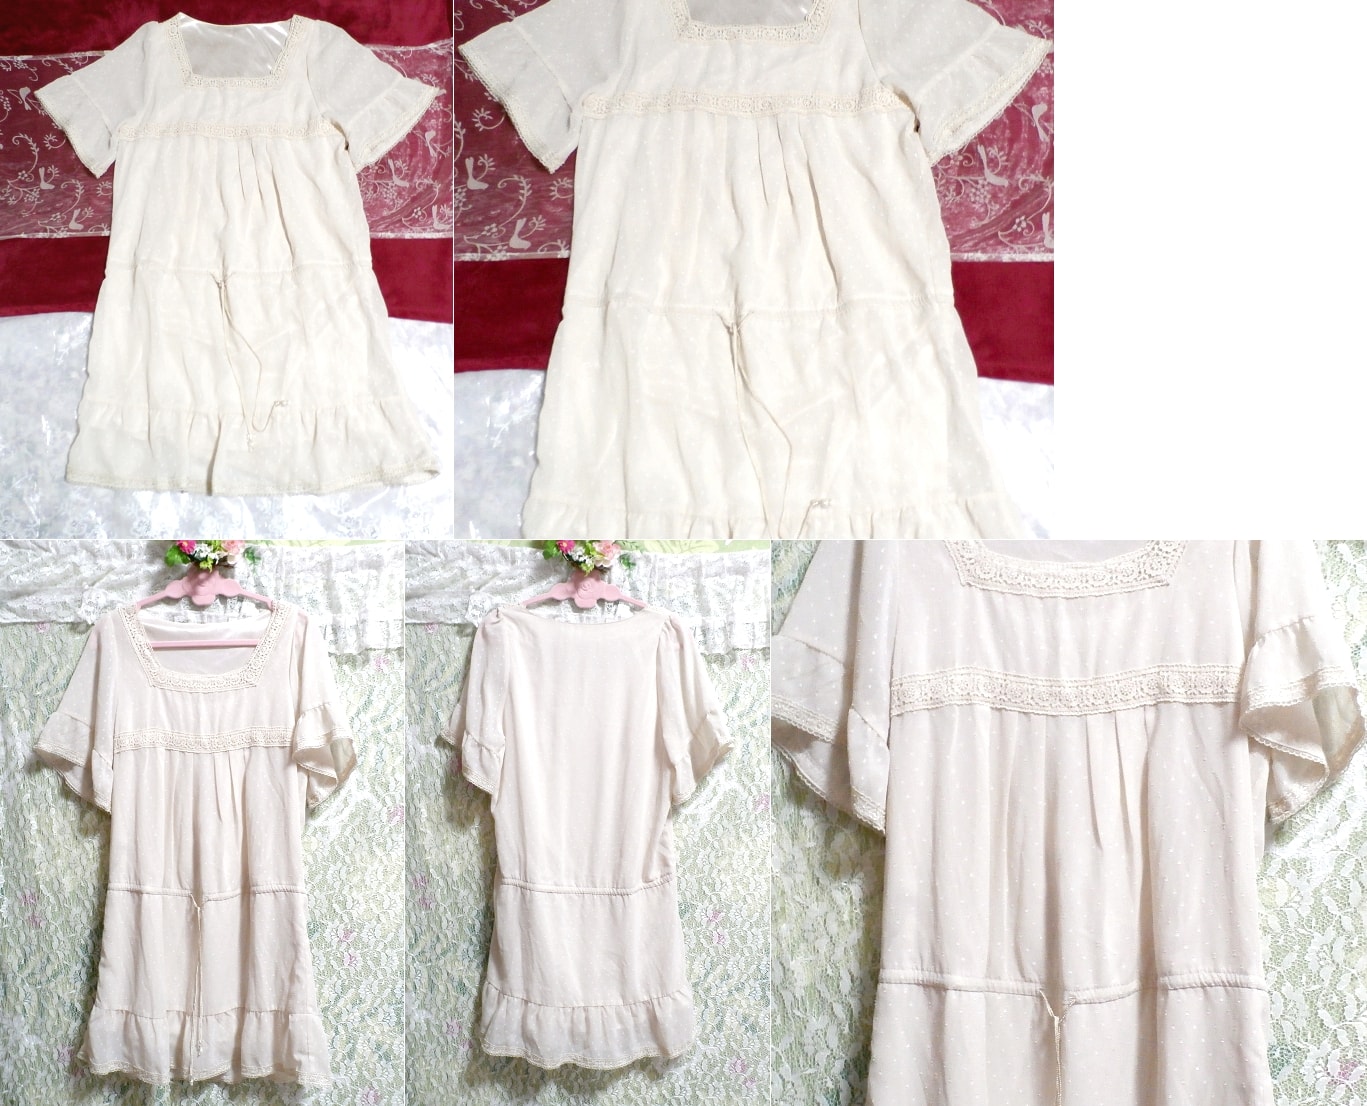 White floral white chiffon negligee nightgown tunic dress, tunic, short sleeve, m size